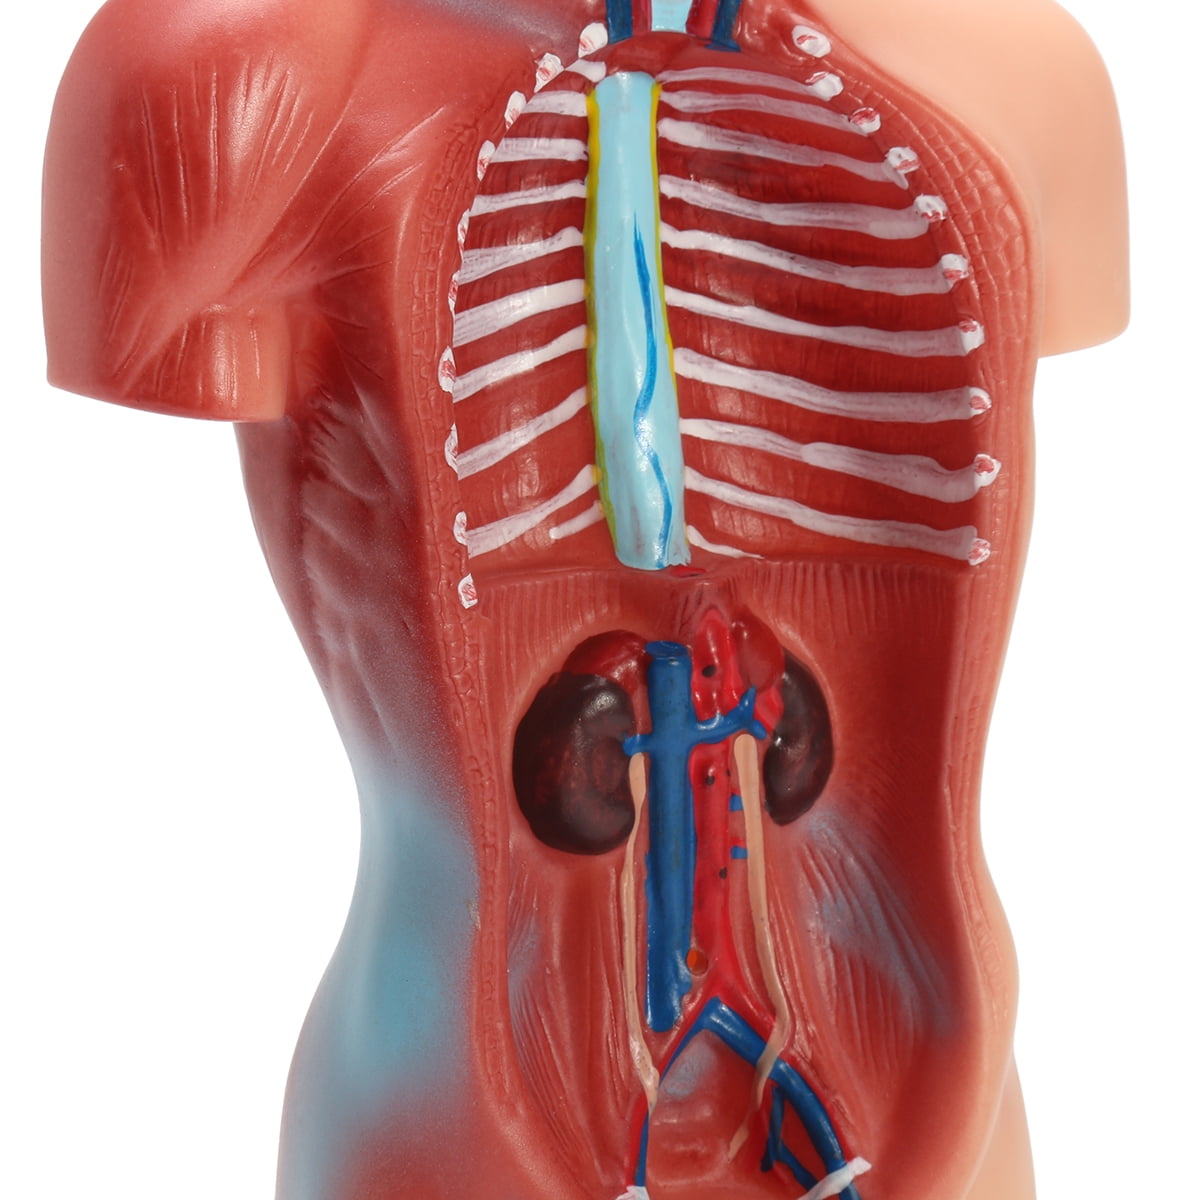 Human Torso Body Anatomy Model Viscera Heart Brain Skeleton Medical Aid Teach